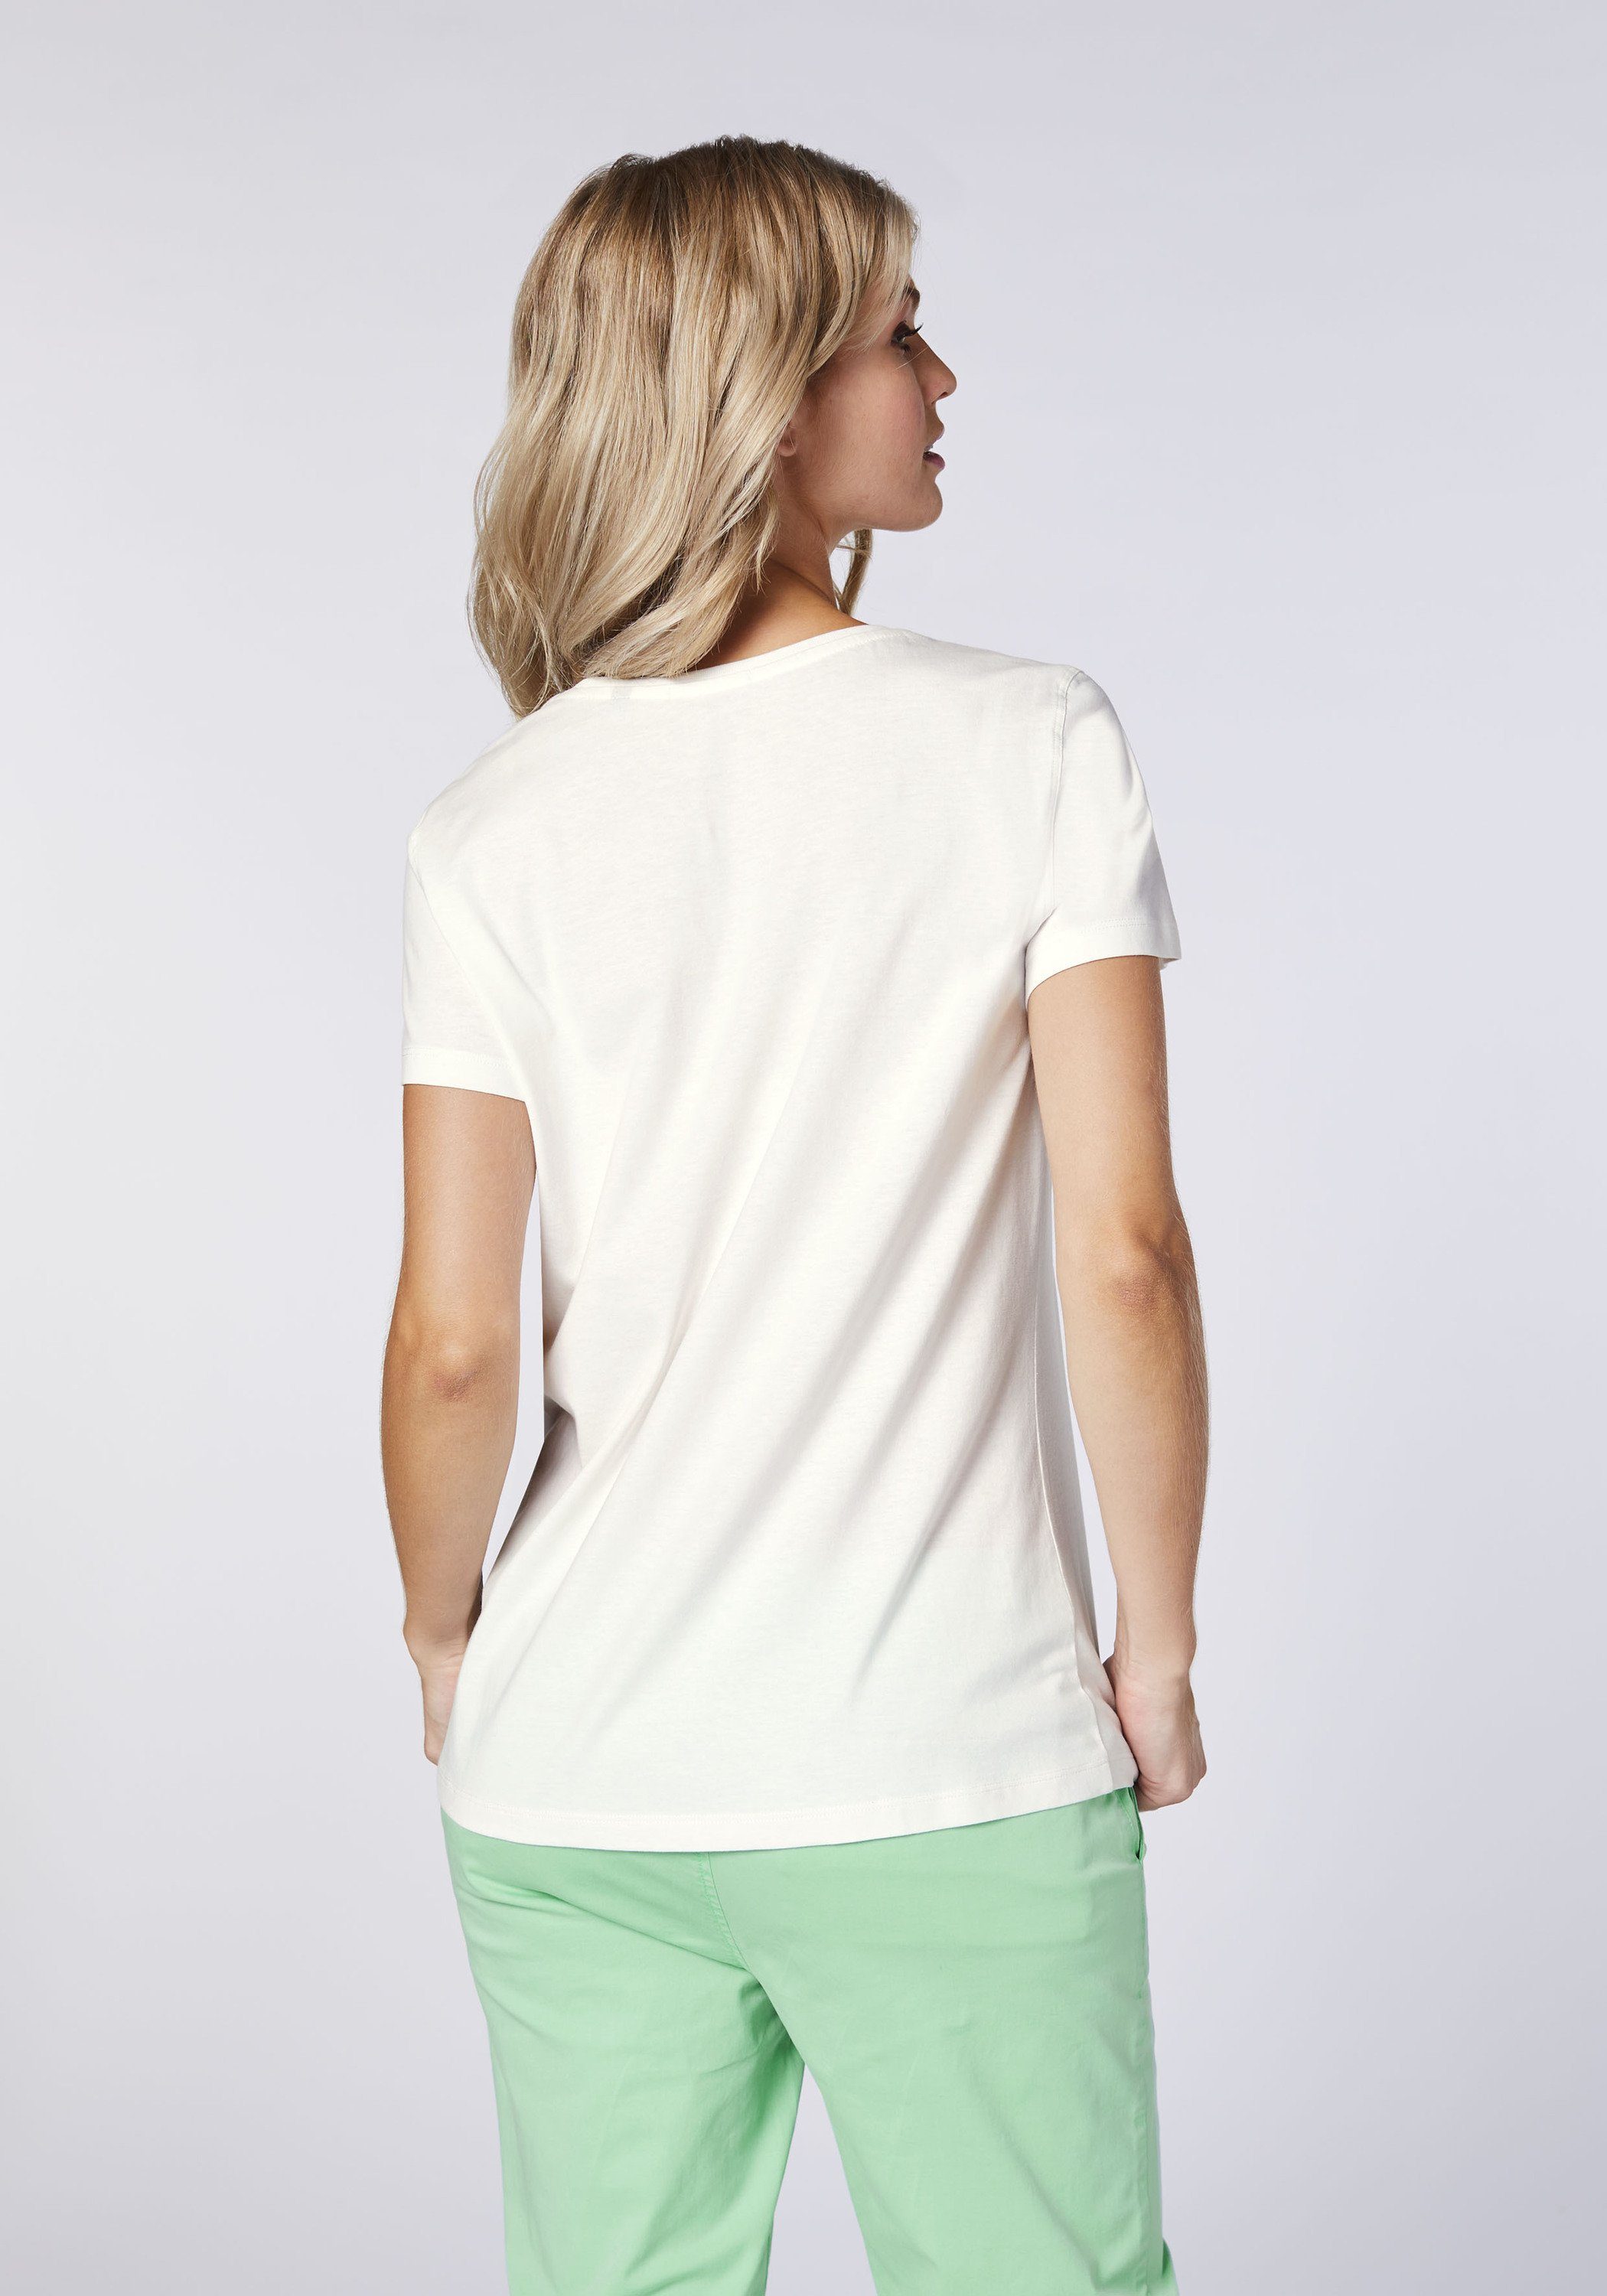 Chiemsee Print-Shirt T-Shirt mit Pink Frontprint White/Light farbenfrohem 1